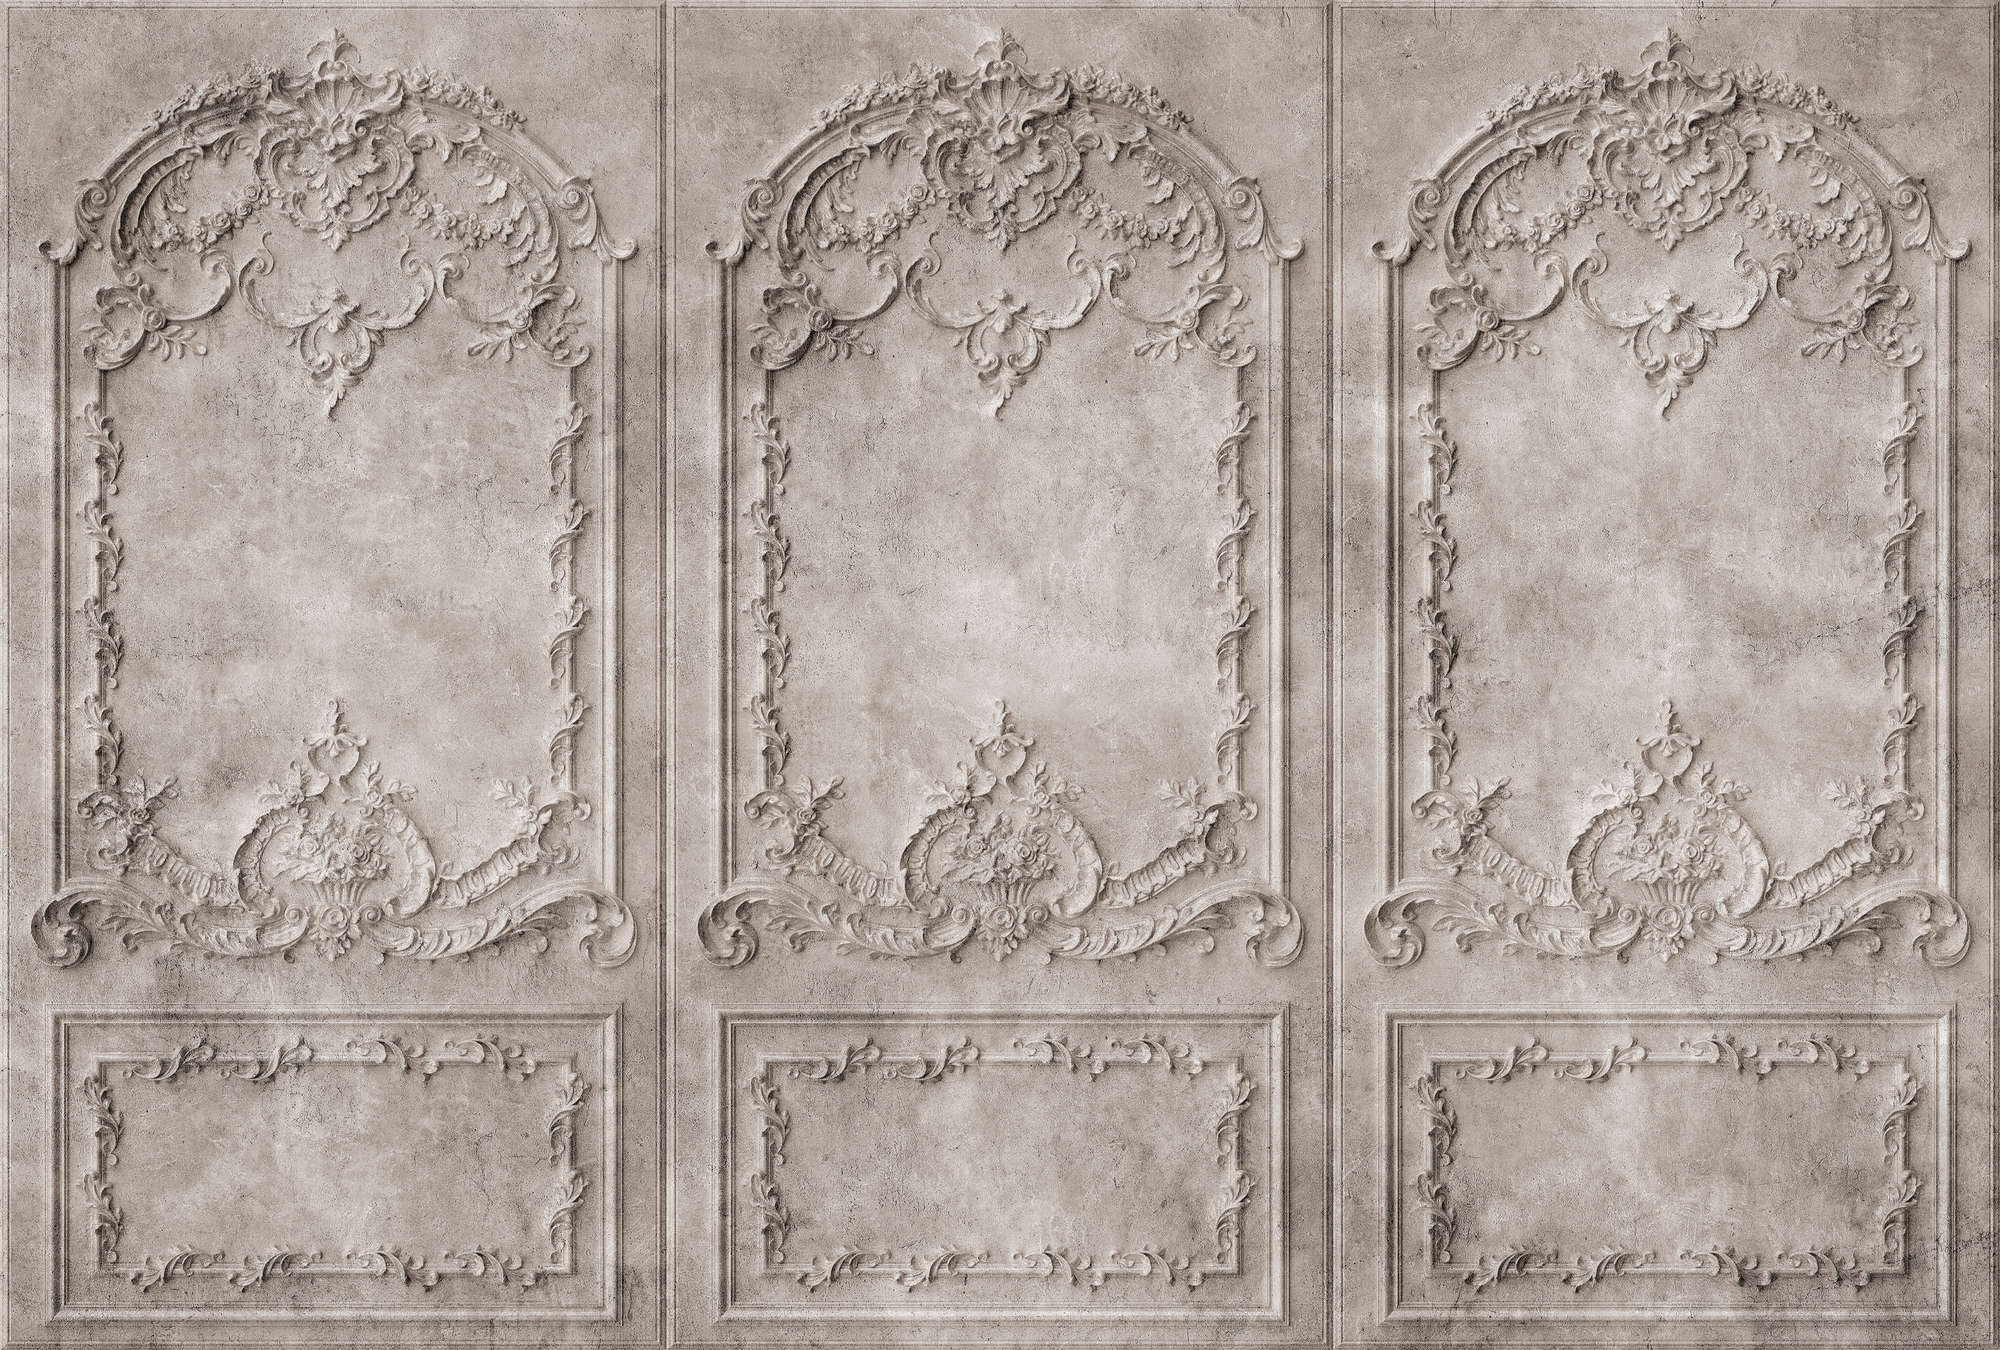             Versailles 1 - Papel pintado de paneles de madera gris-marrón de estilo barroco
        